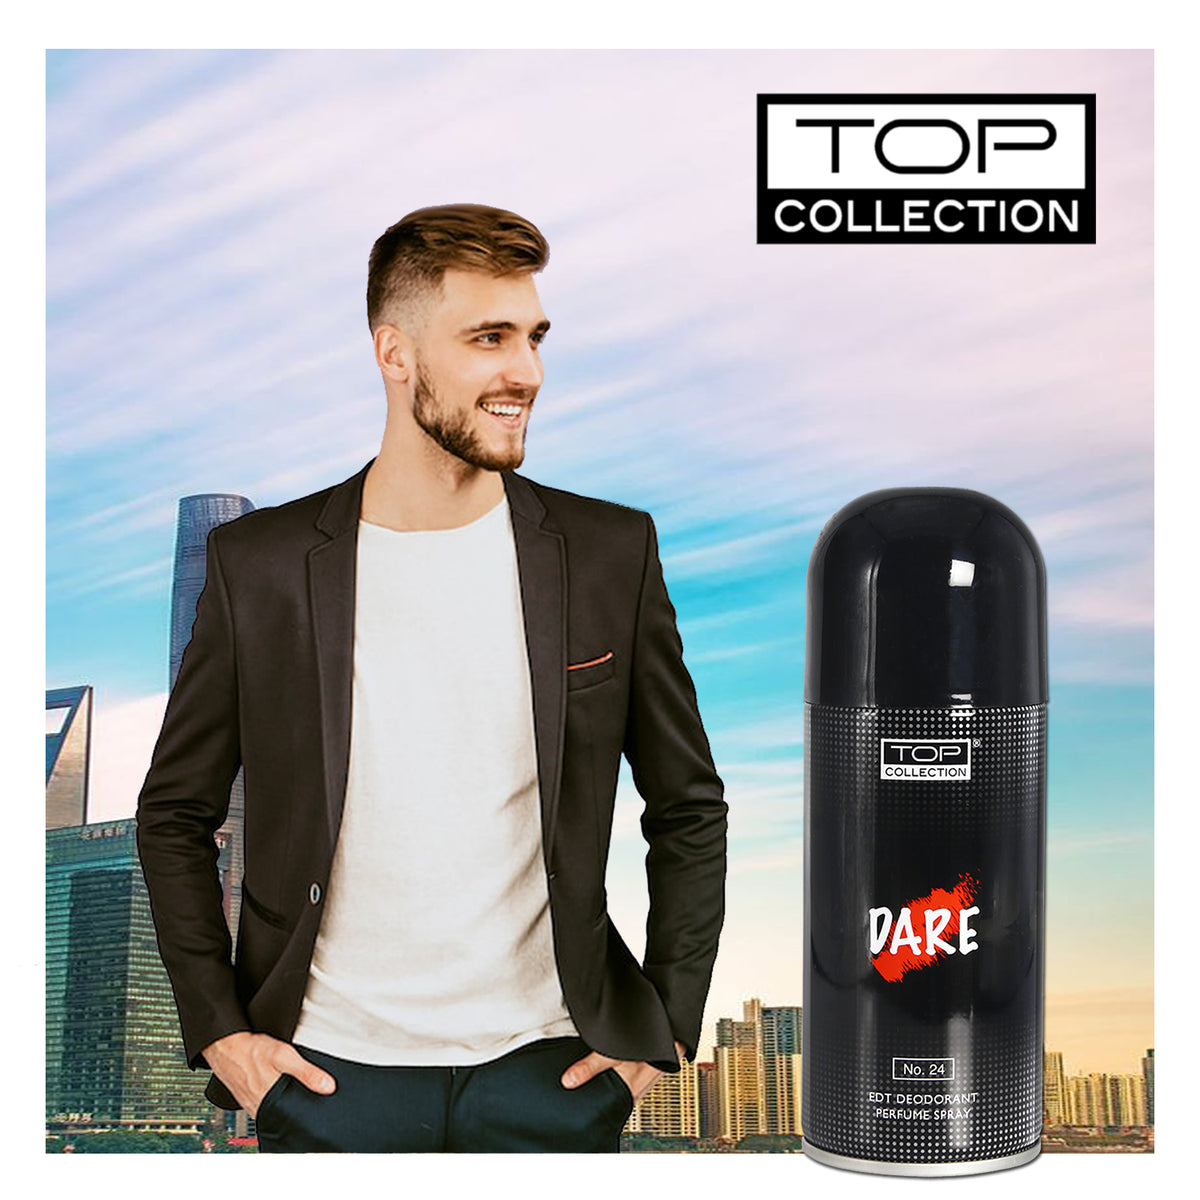 Top Collection Eau De Toilette Deodrant Perfume Spray - Dare, 150ml